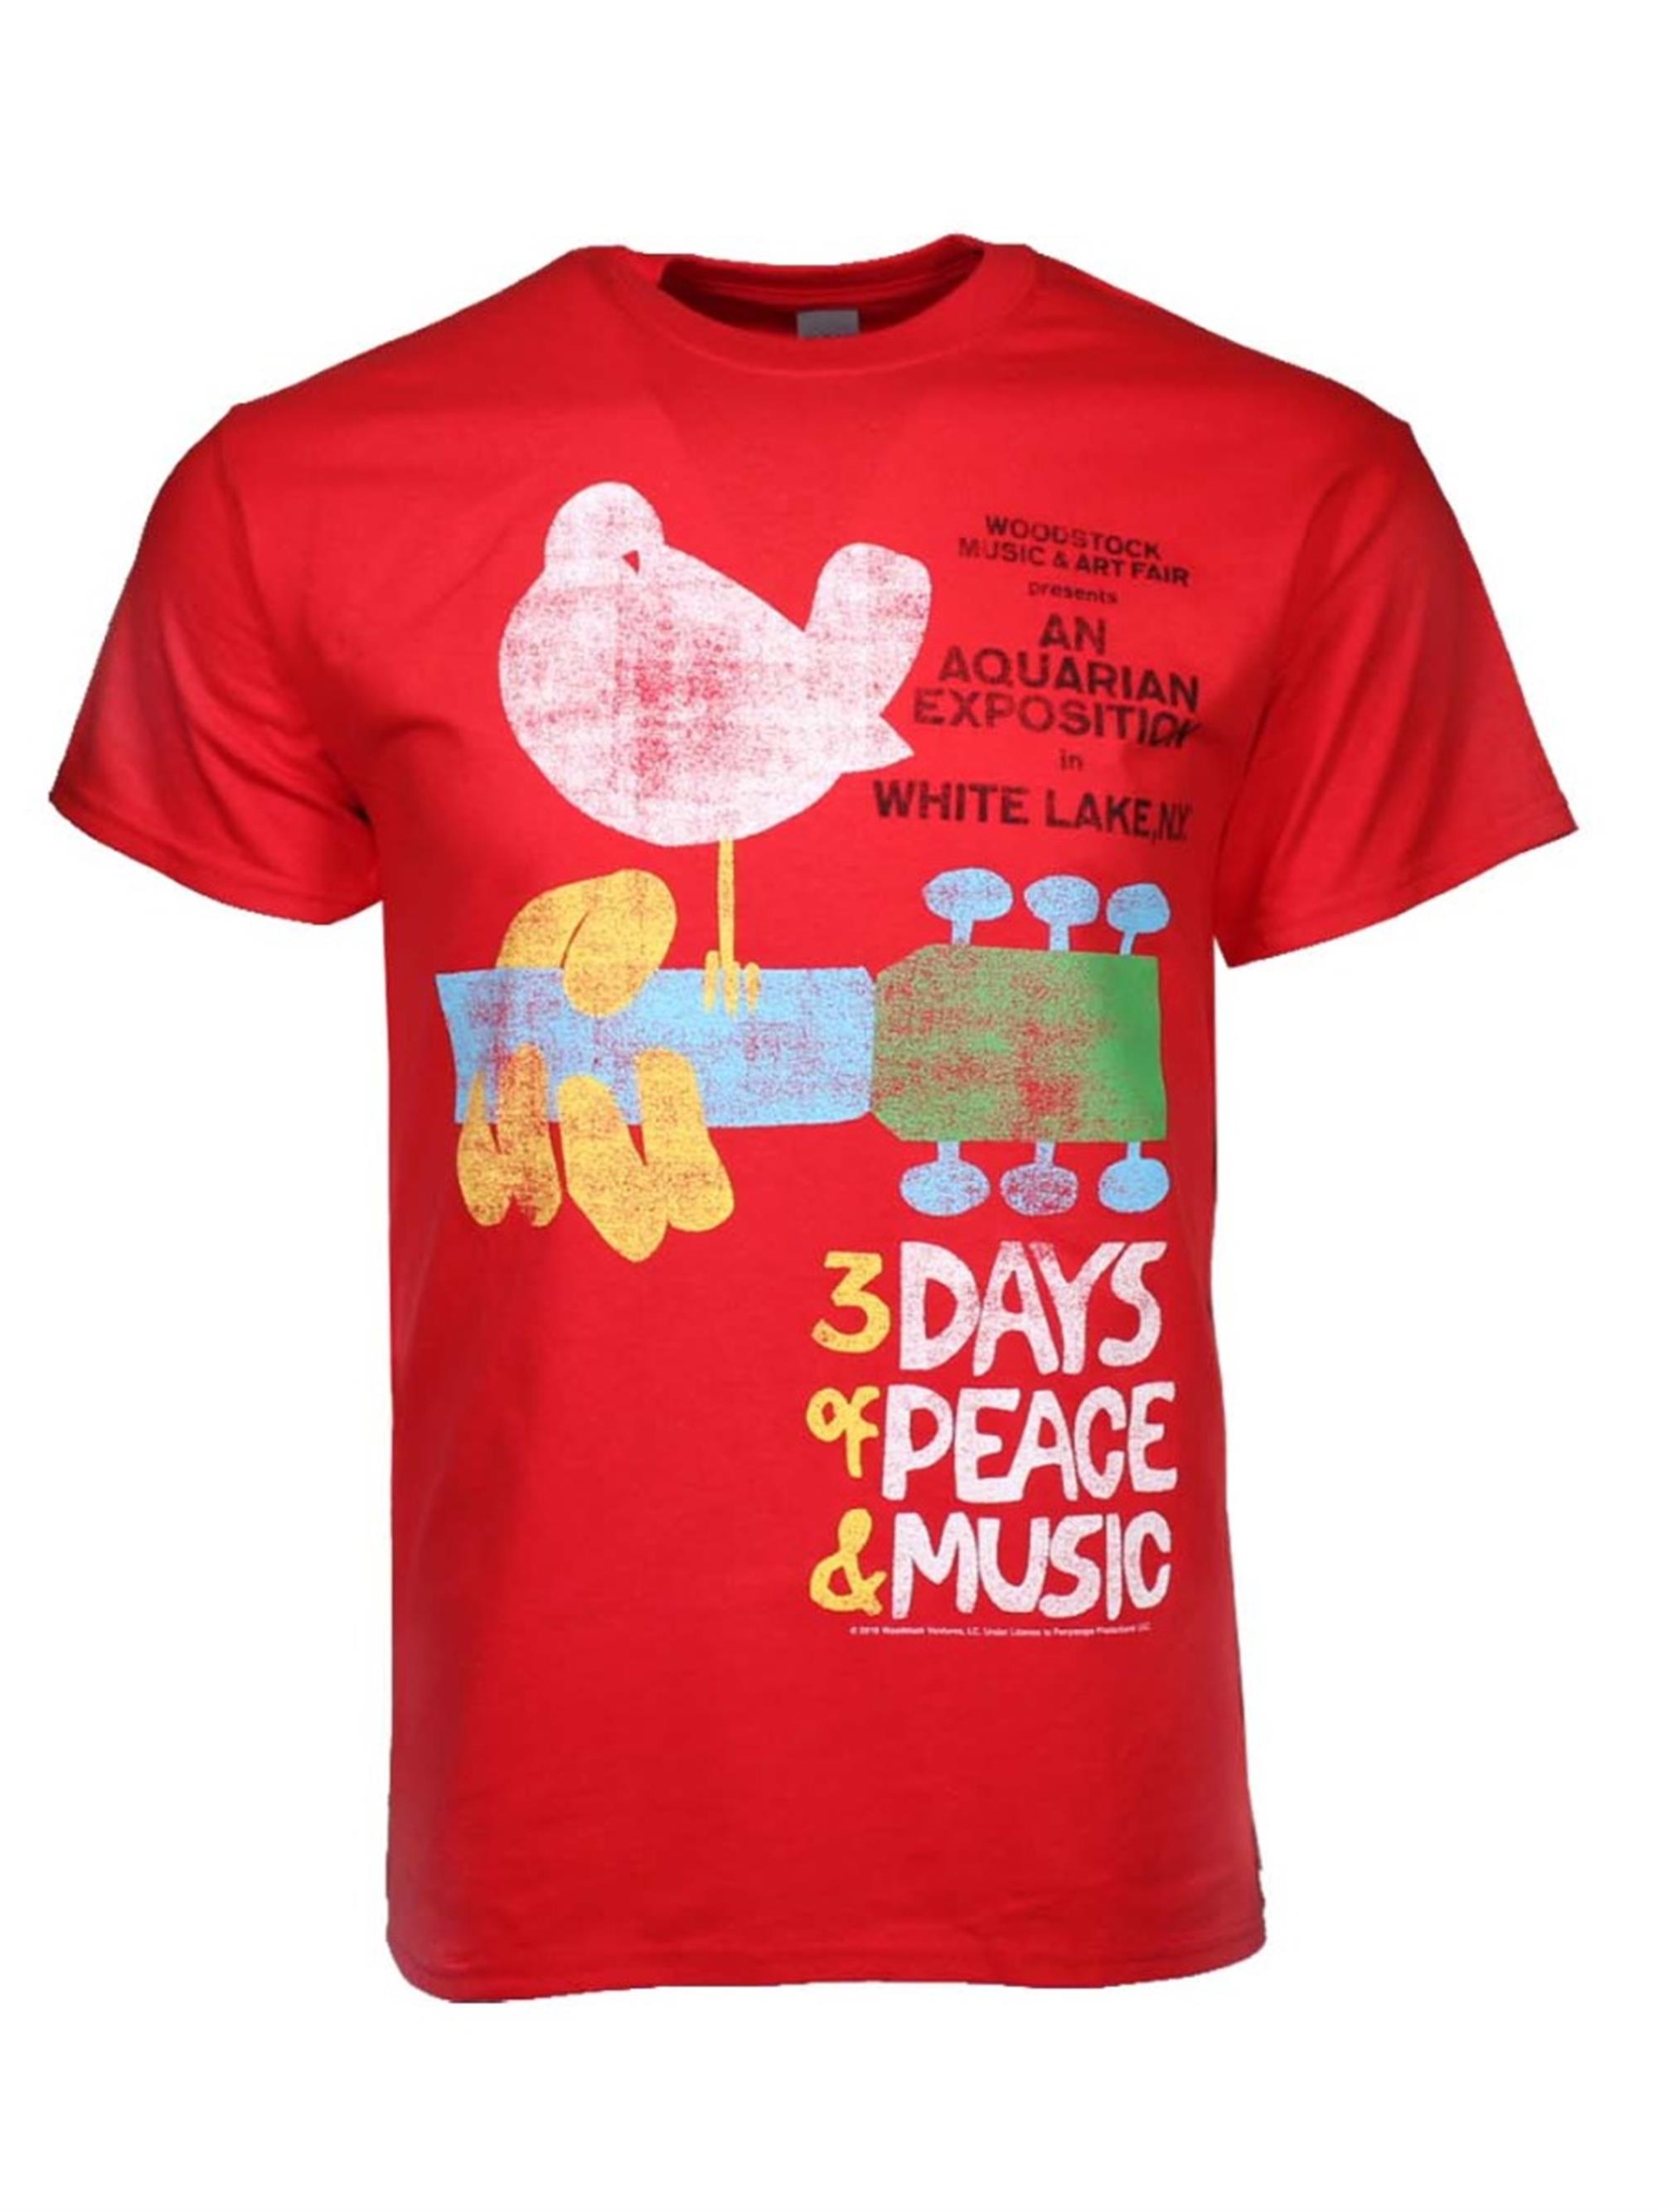 Woodstock Poster T-Shirt